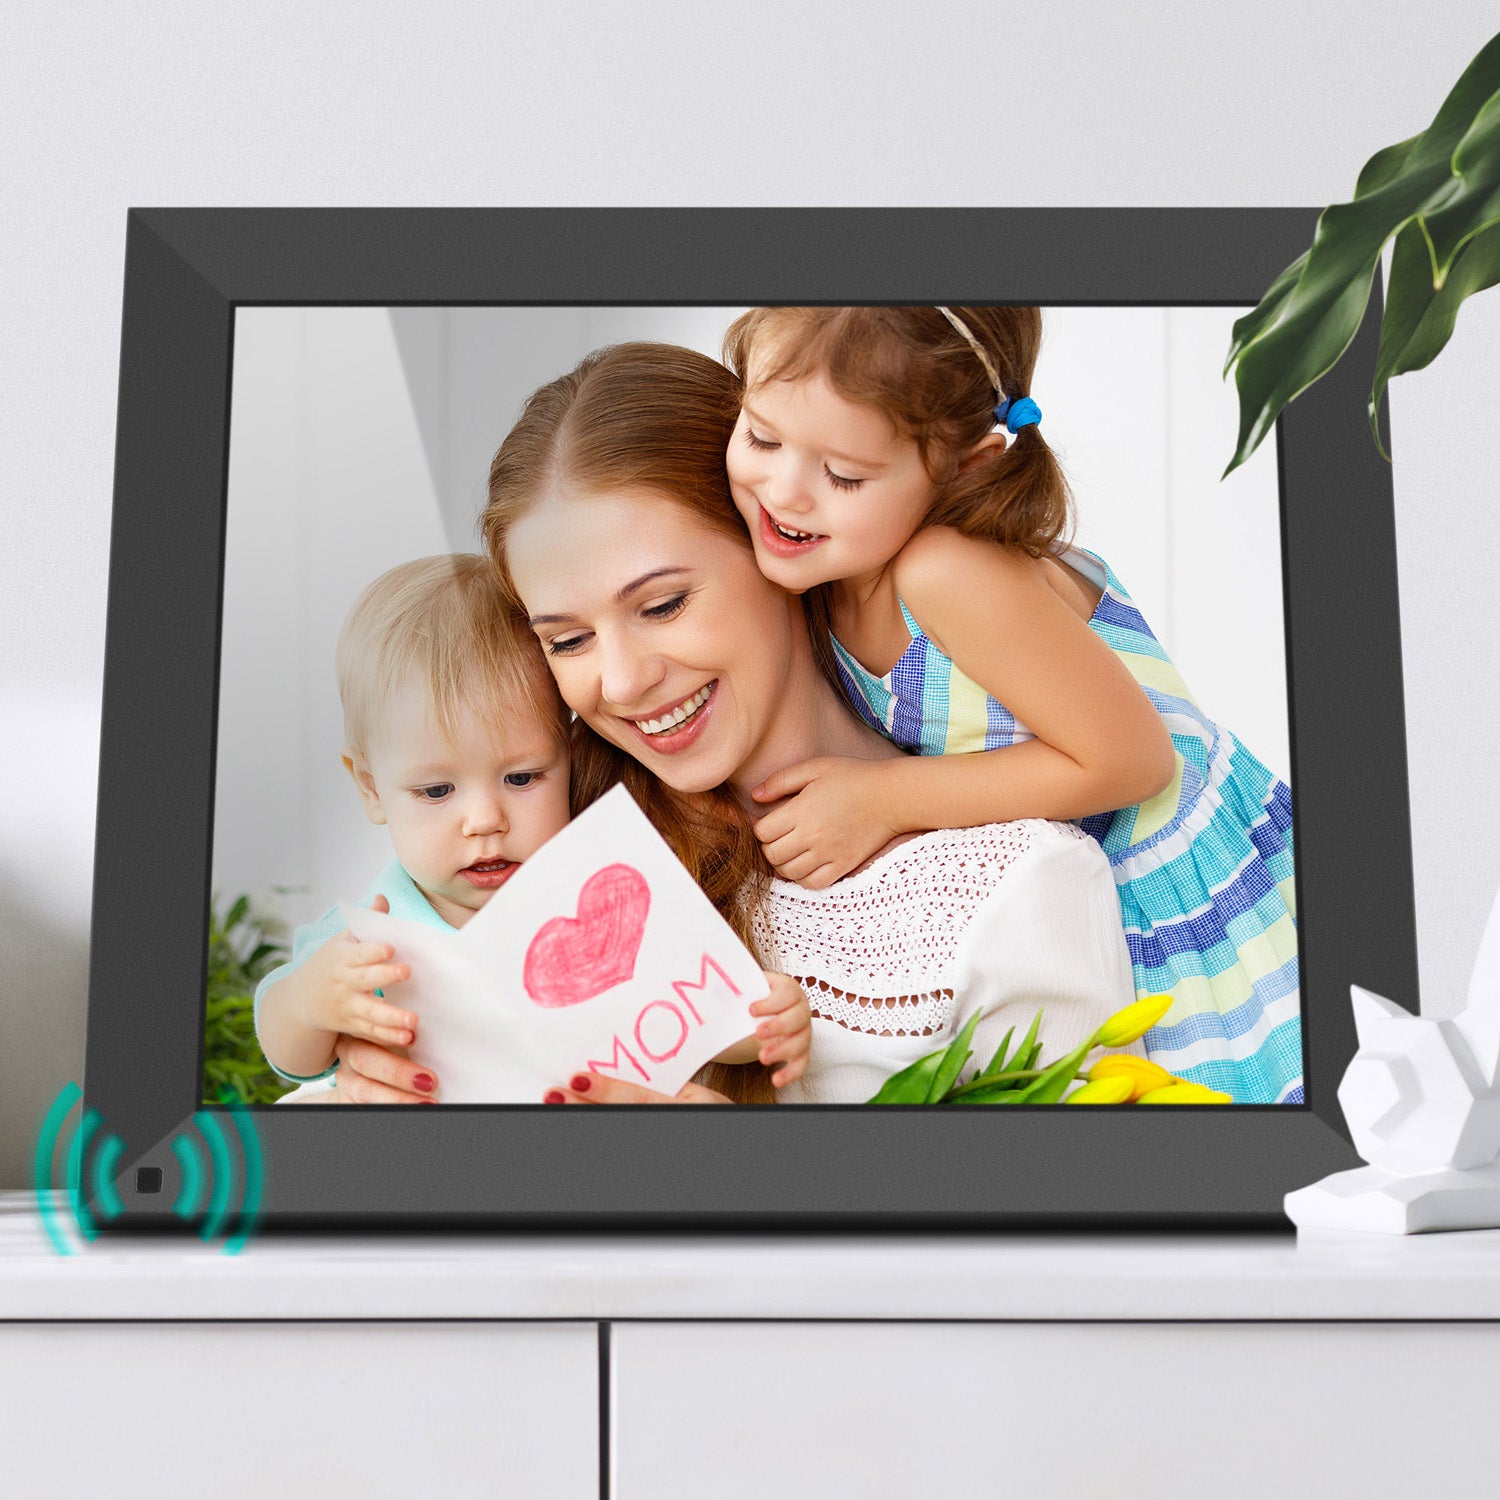 Celebrate Mom: Relive Cherished Moments with Aluratek Digital Photo Frames